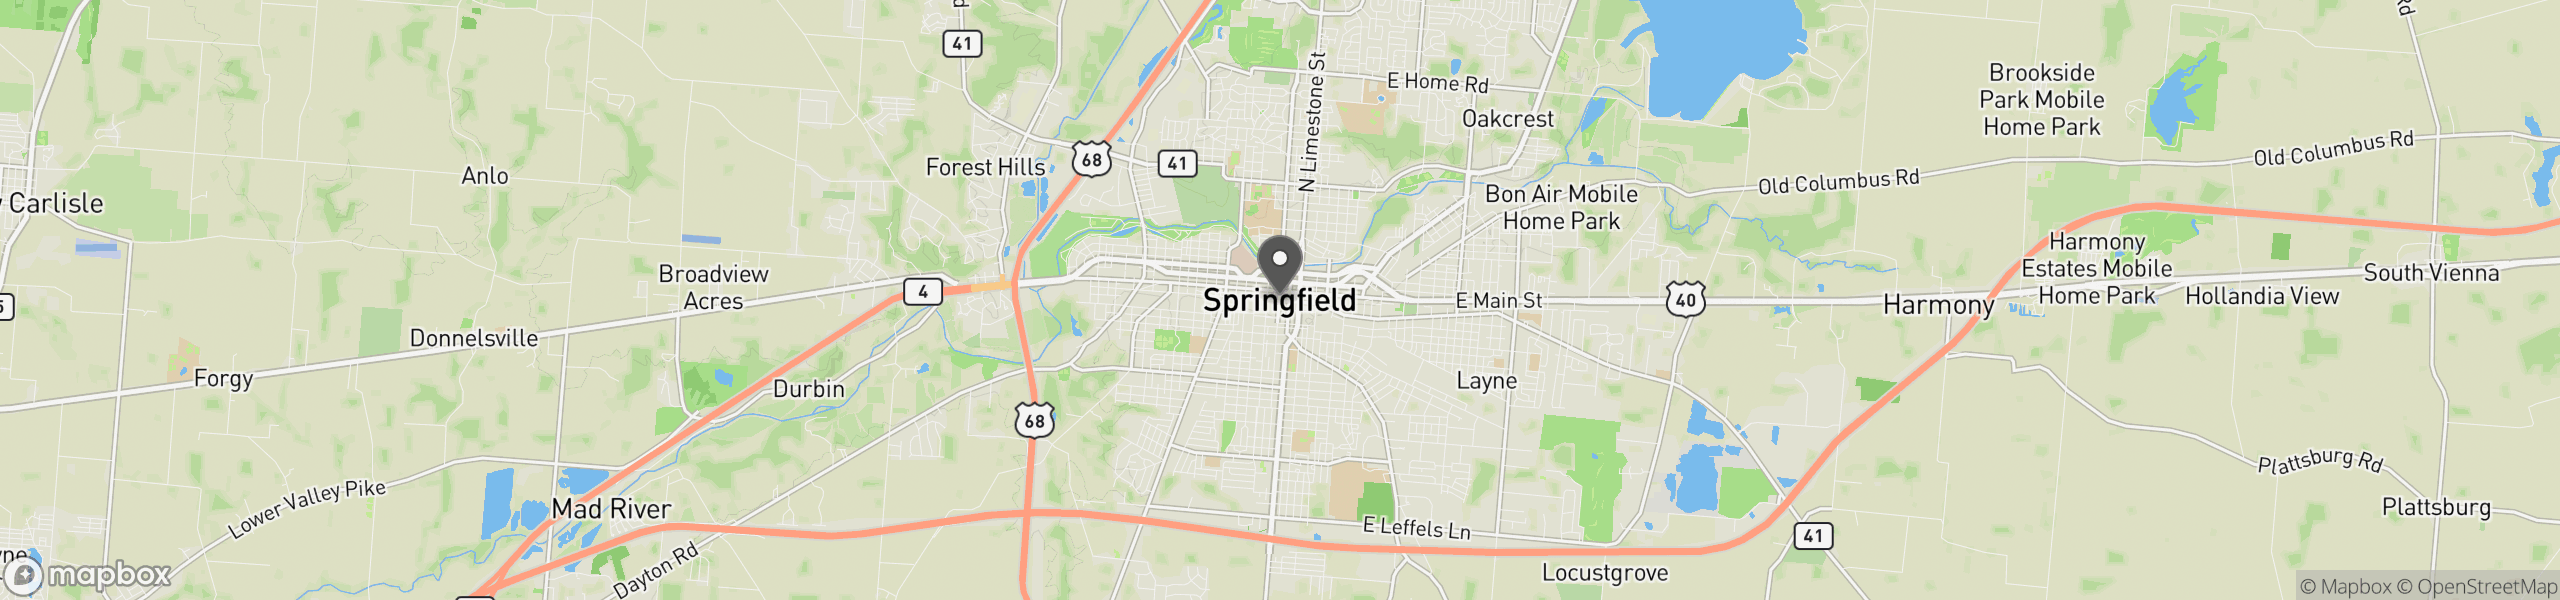 Springfield, OH 45501